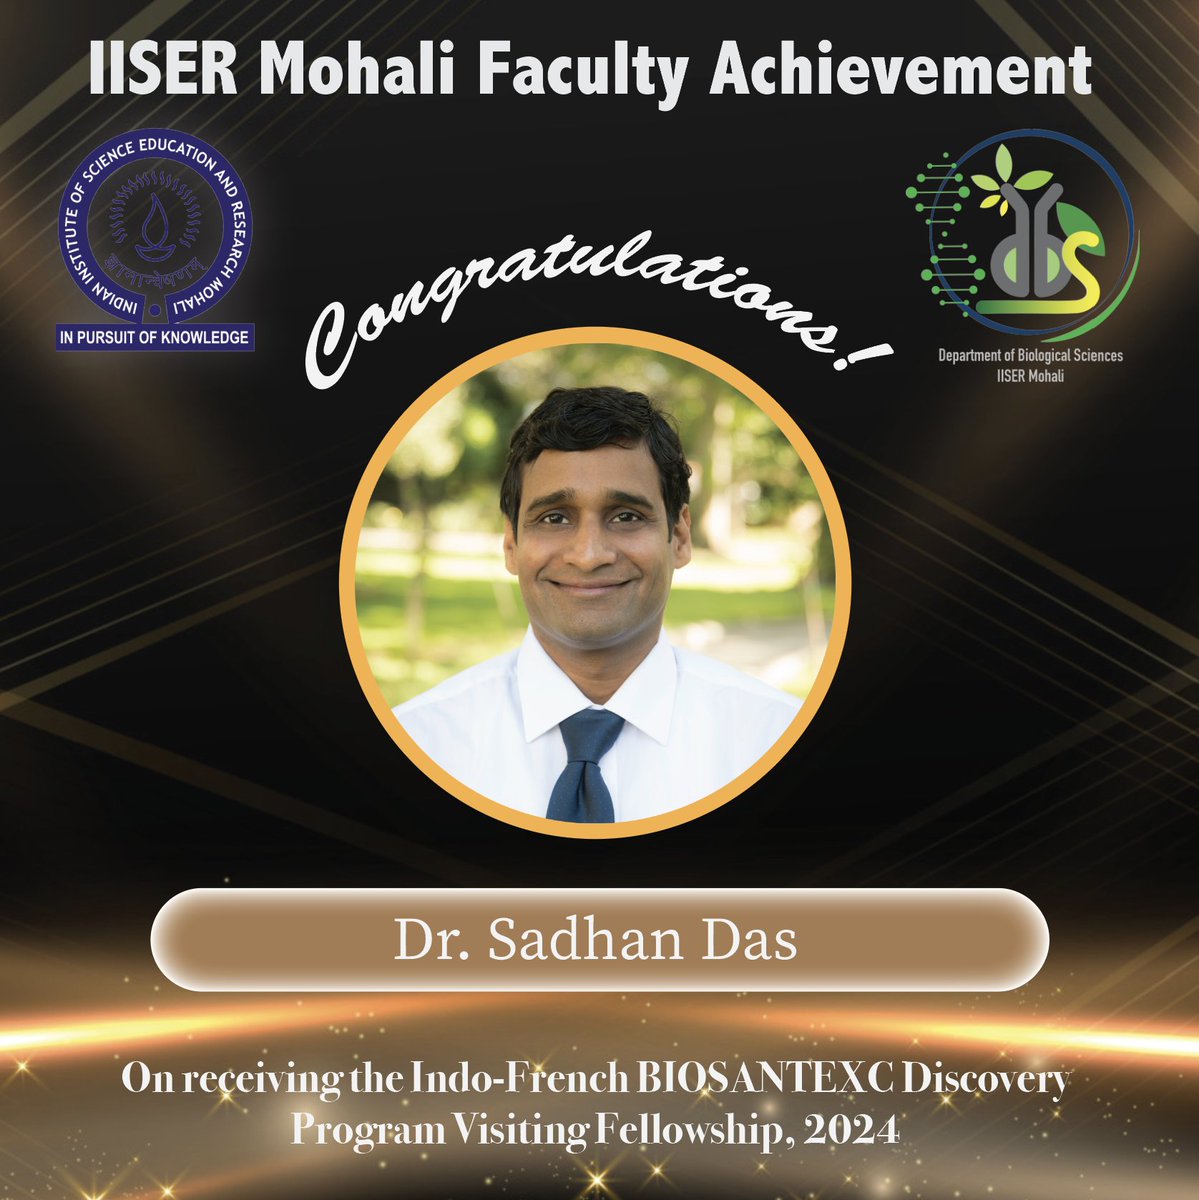 Congratulations to our DBS faculty Dr. Sadhan Das @Sadhan24 on receiving the Indo-French BIOSANTEXC Discovery Program Visiting Fellowship 2024 @ENSdeLyon @IiserMohali